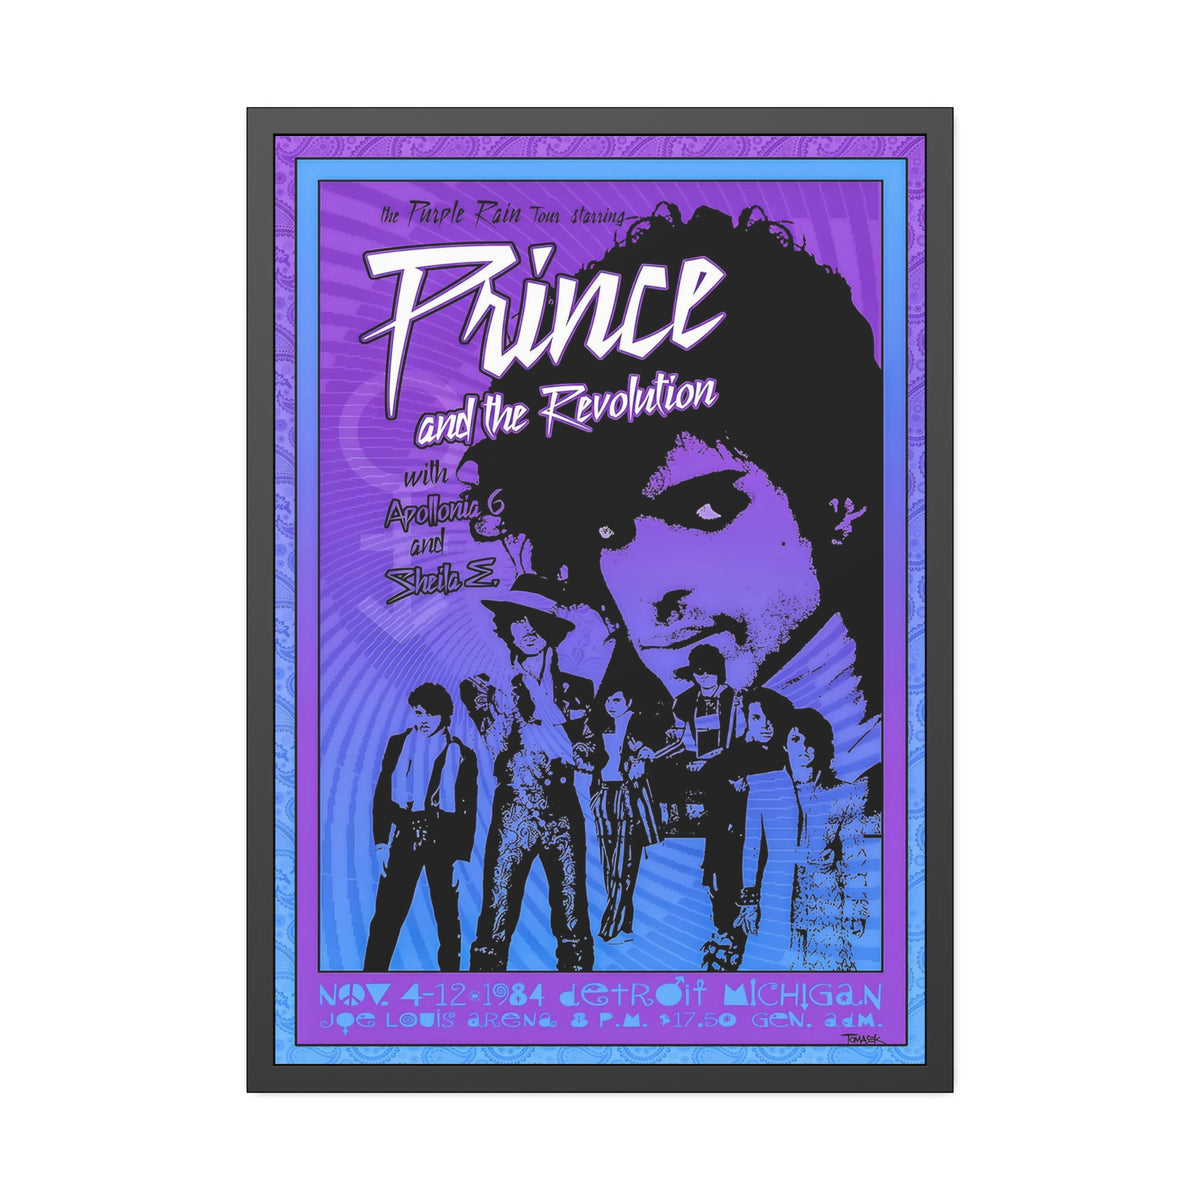 Prince Concert Poster II